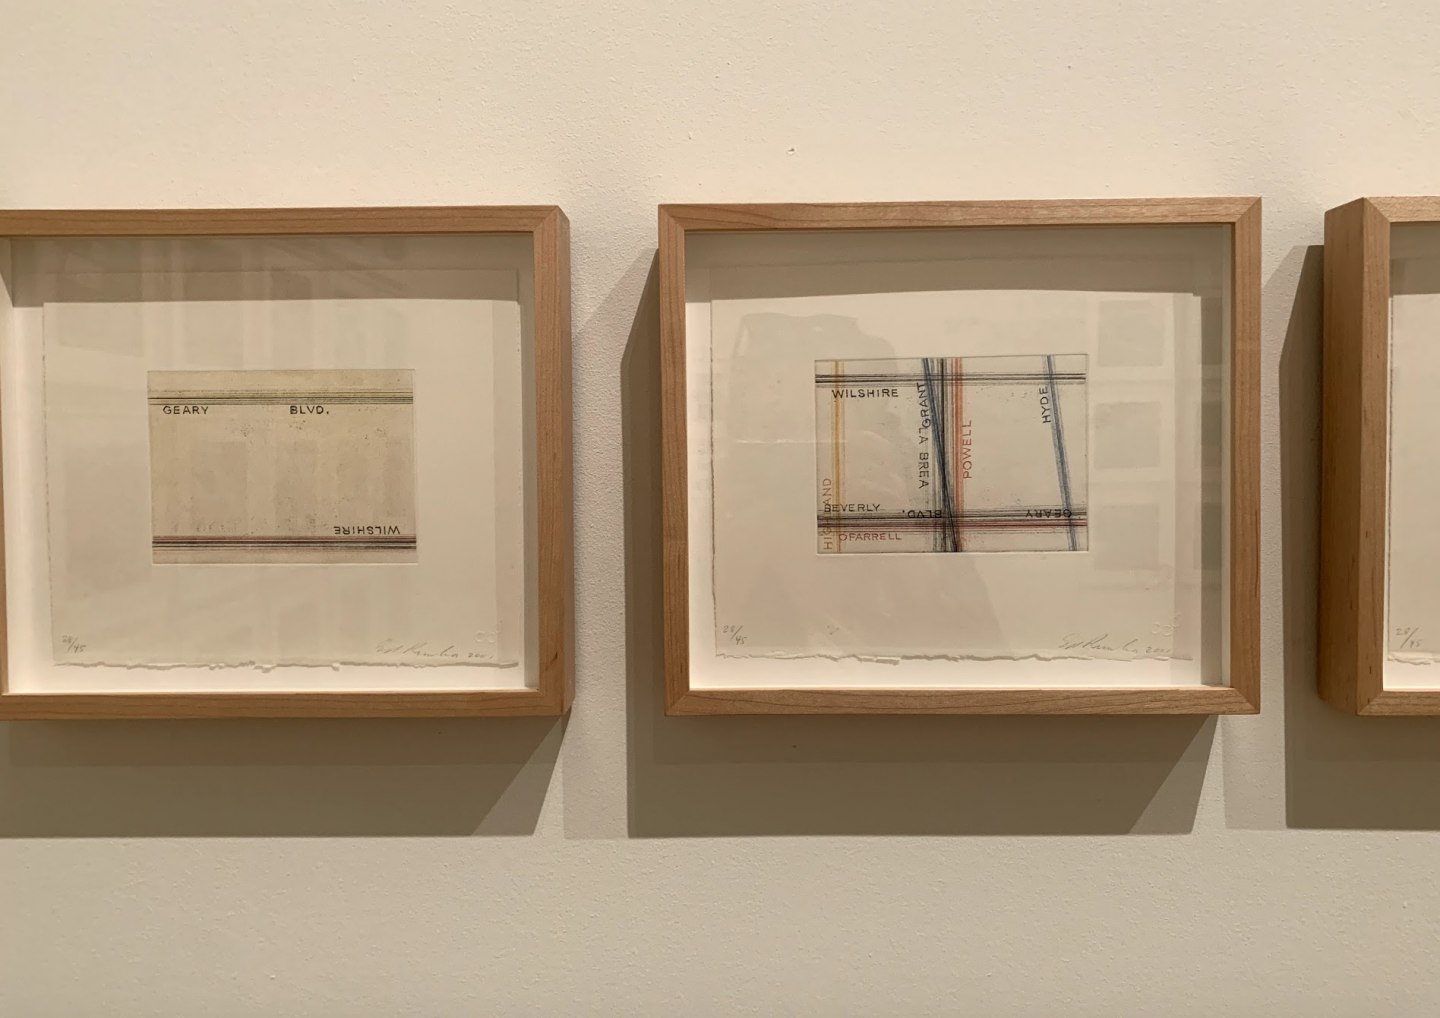 Works by Edward Ruscha at Tate Modern